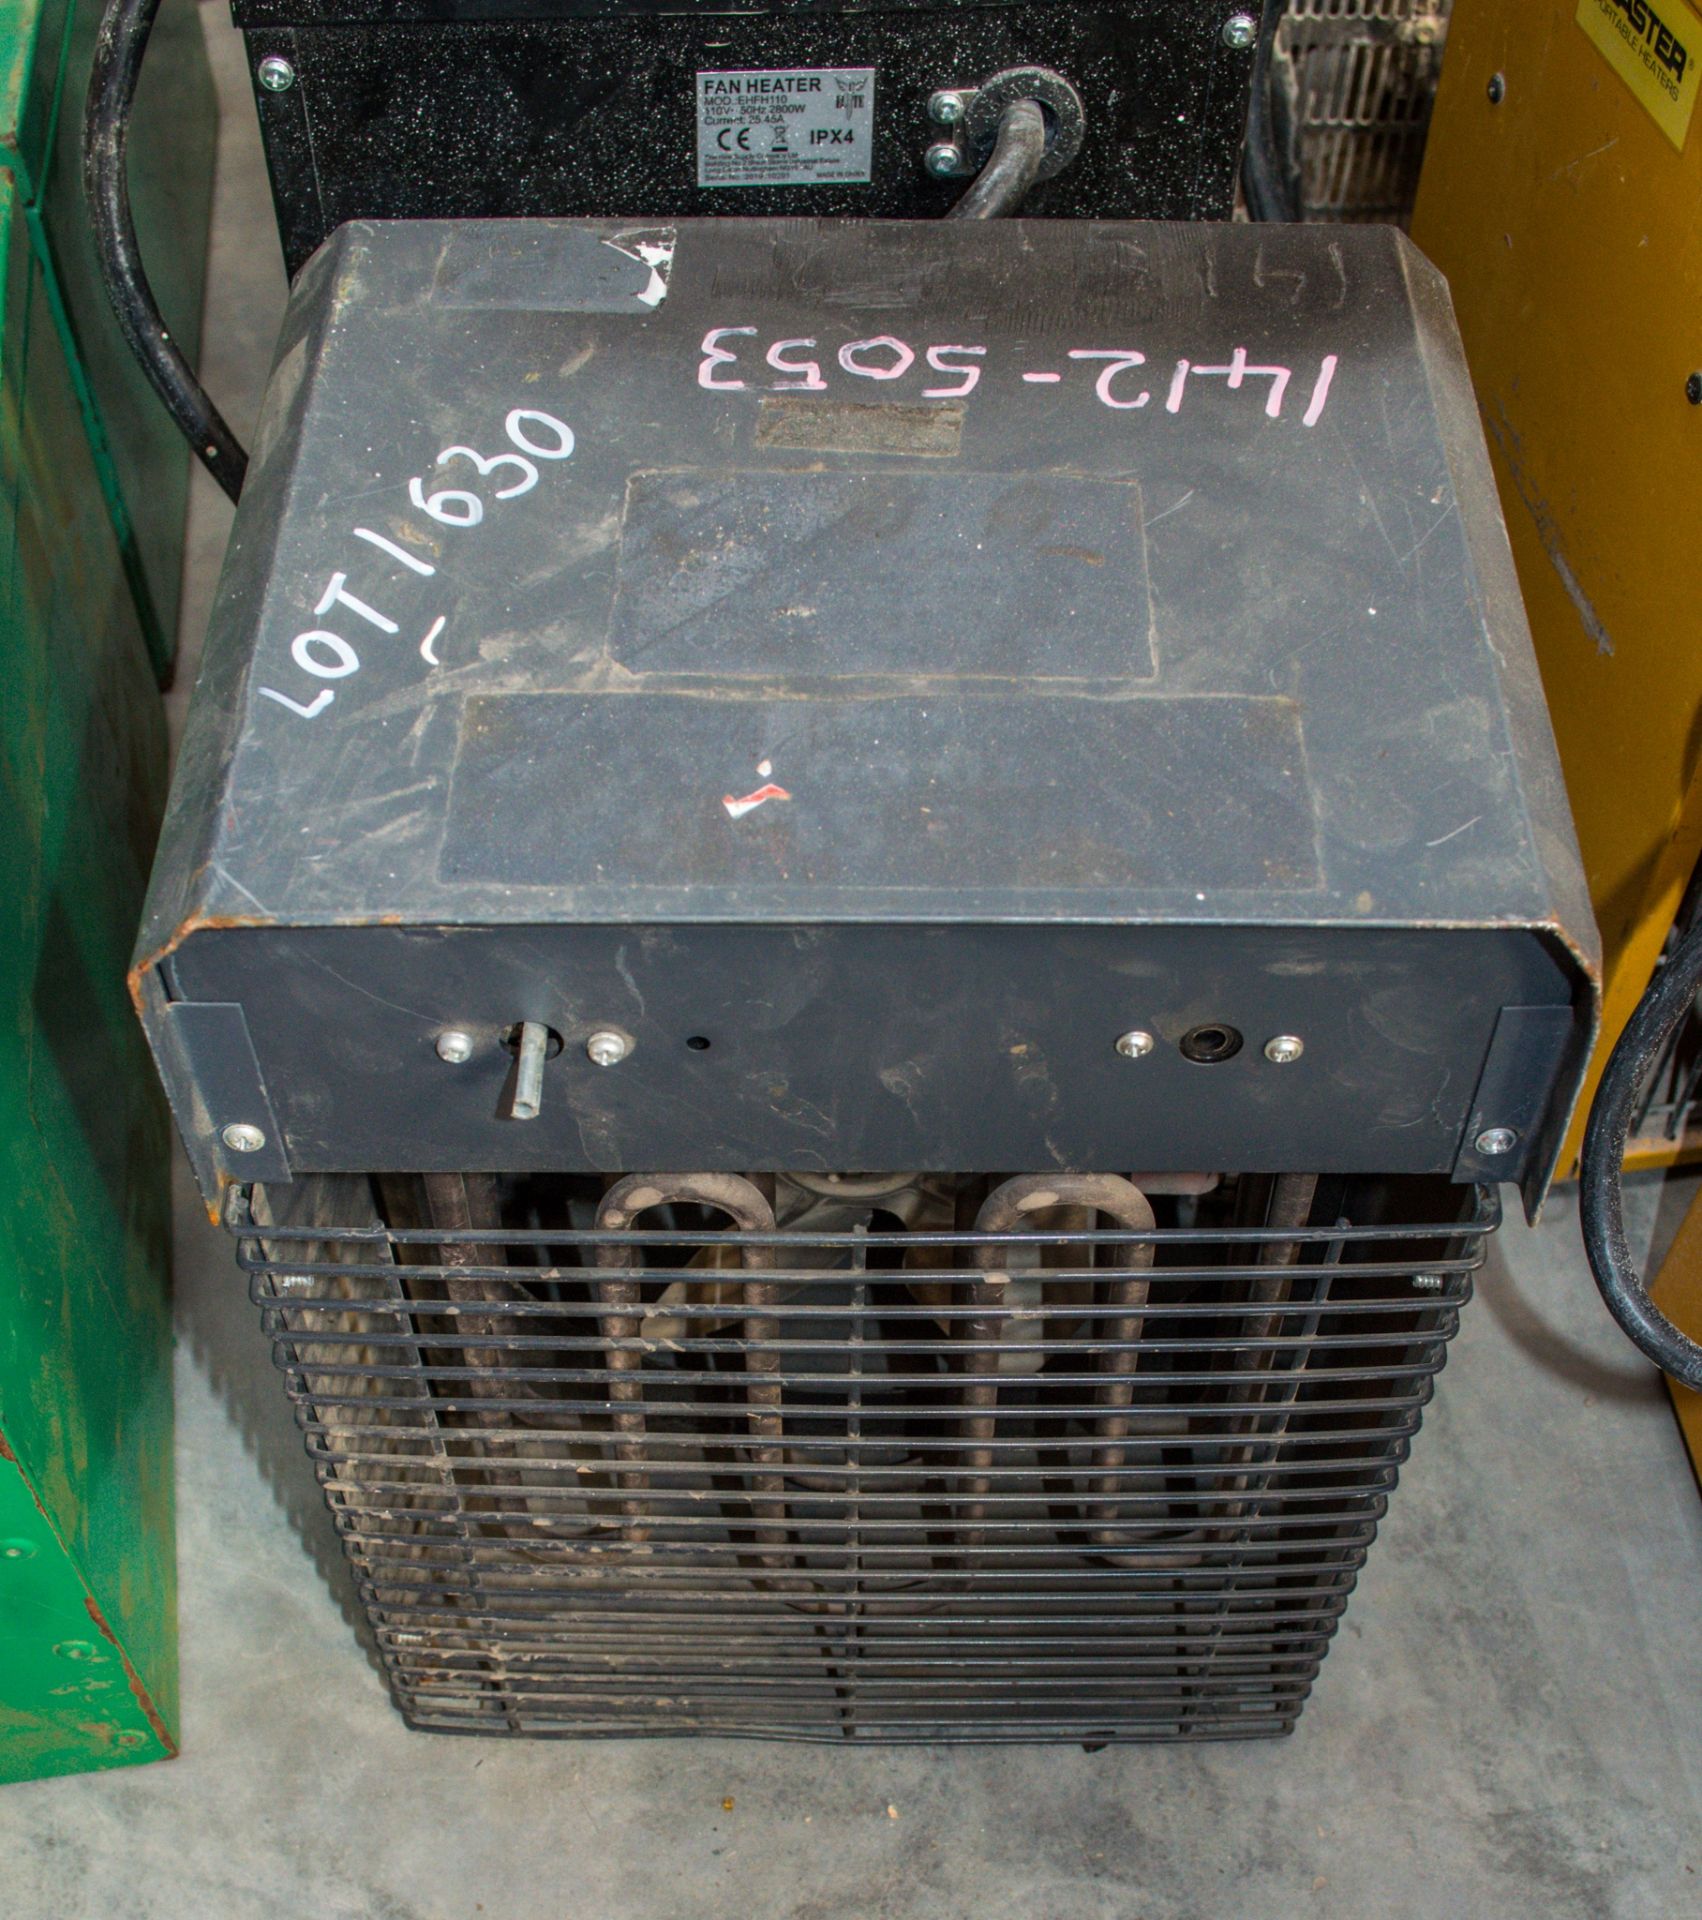 Rhino 240v fan heater 14125053 ** Power cord cut off **